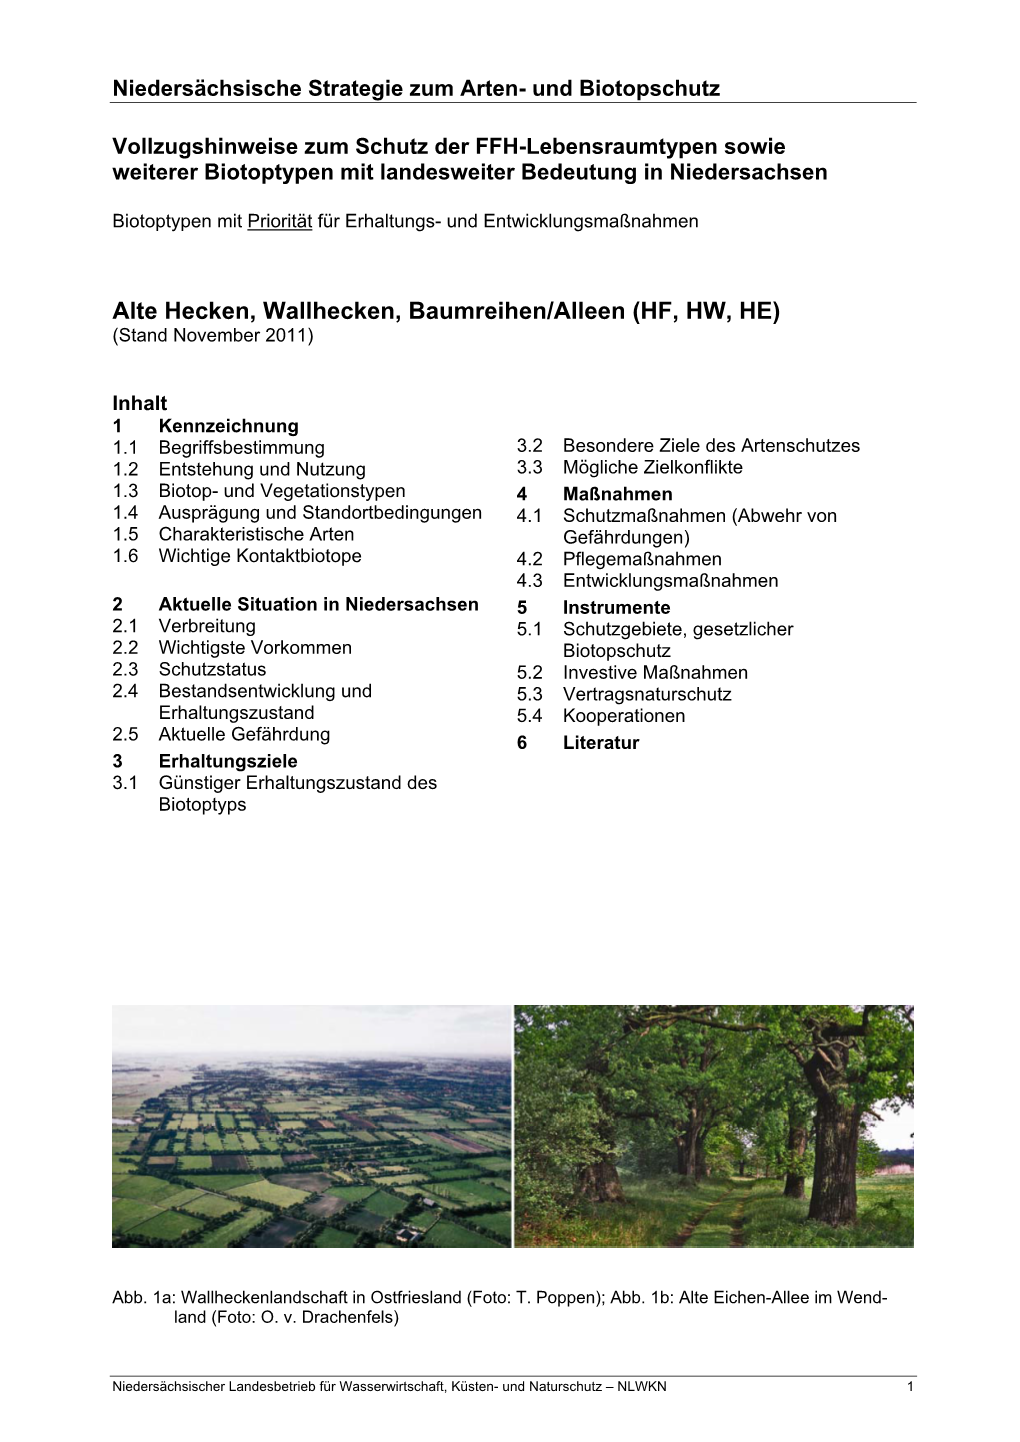 Alte Hecken, Wallhecken, Baumreihen/Alleen (HF, HW, HE) (Stand November 2011)